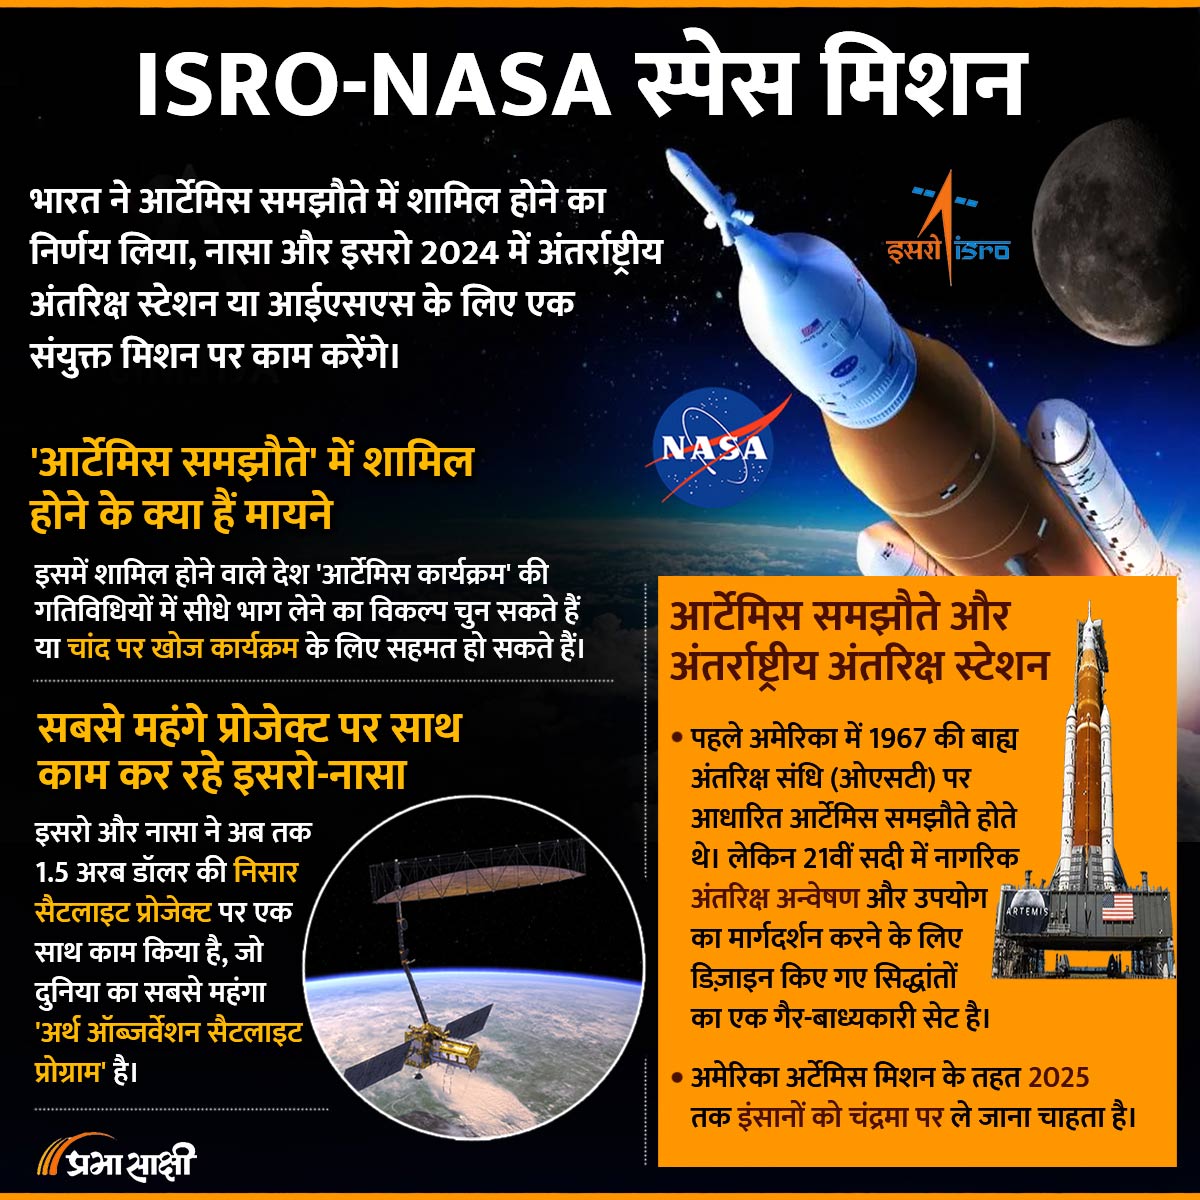 ISRO-NASA Space Mission